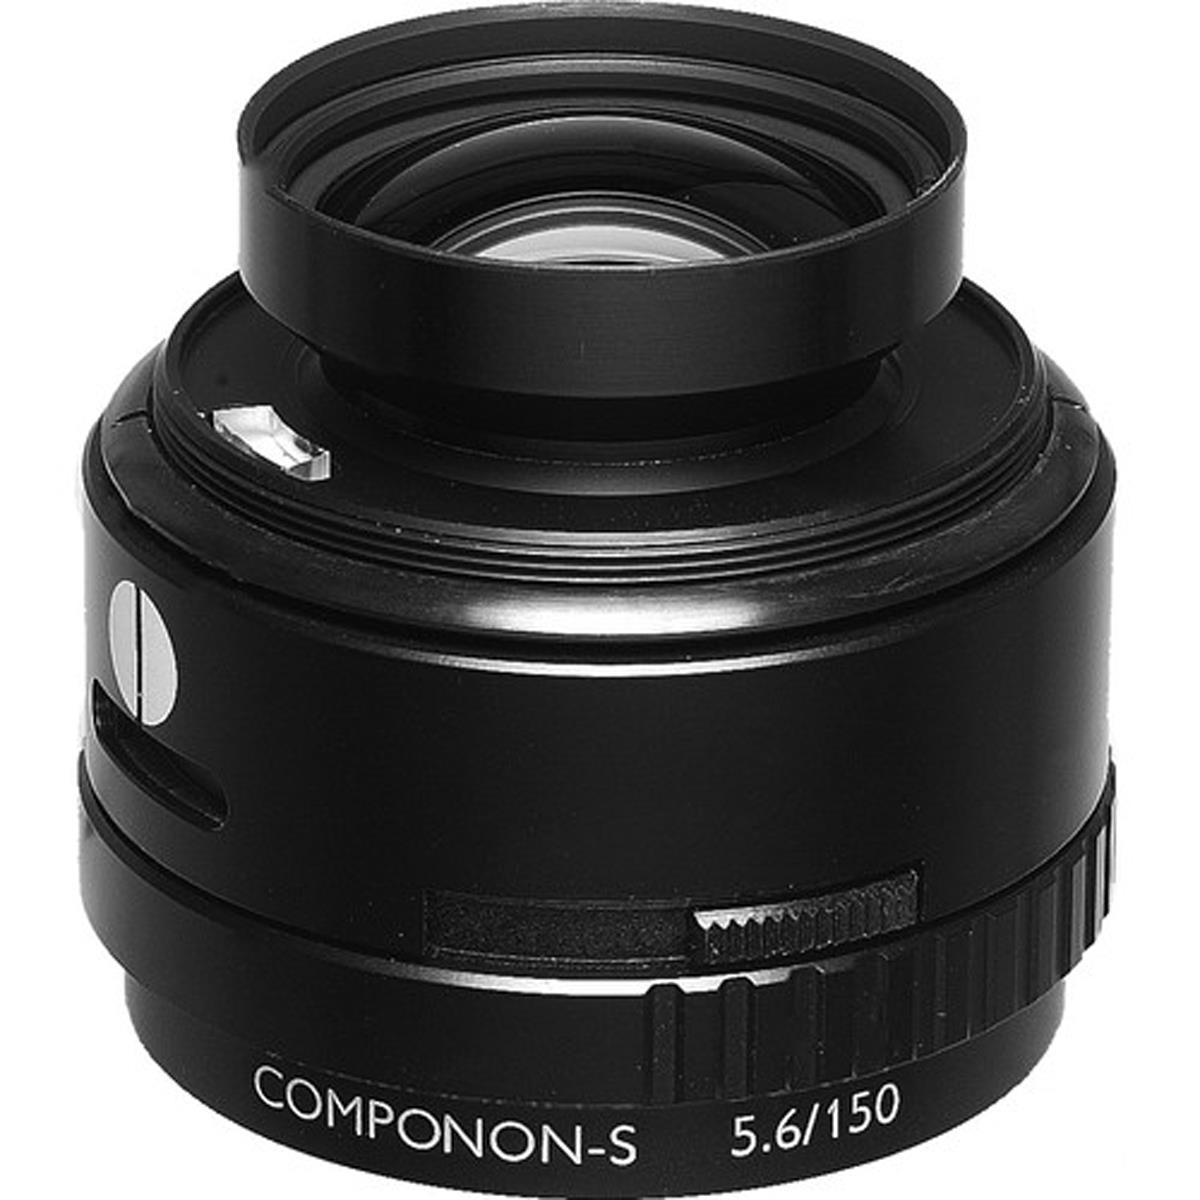 

Schneider 150mm f/5.6 Componon-S Enlarging Lens - USA